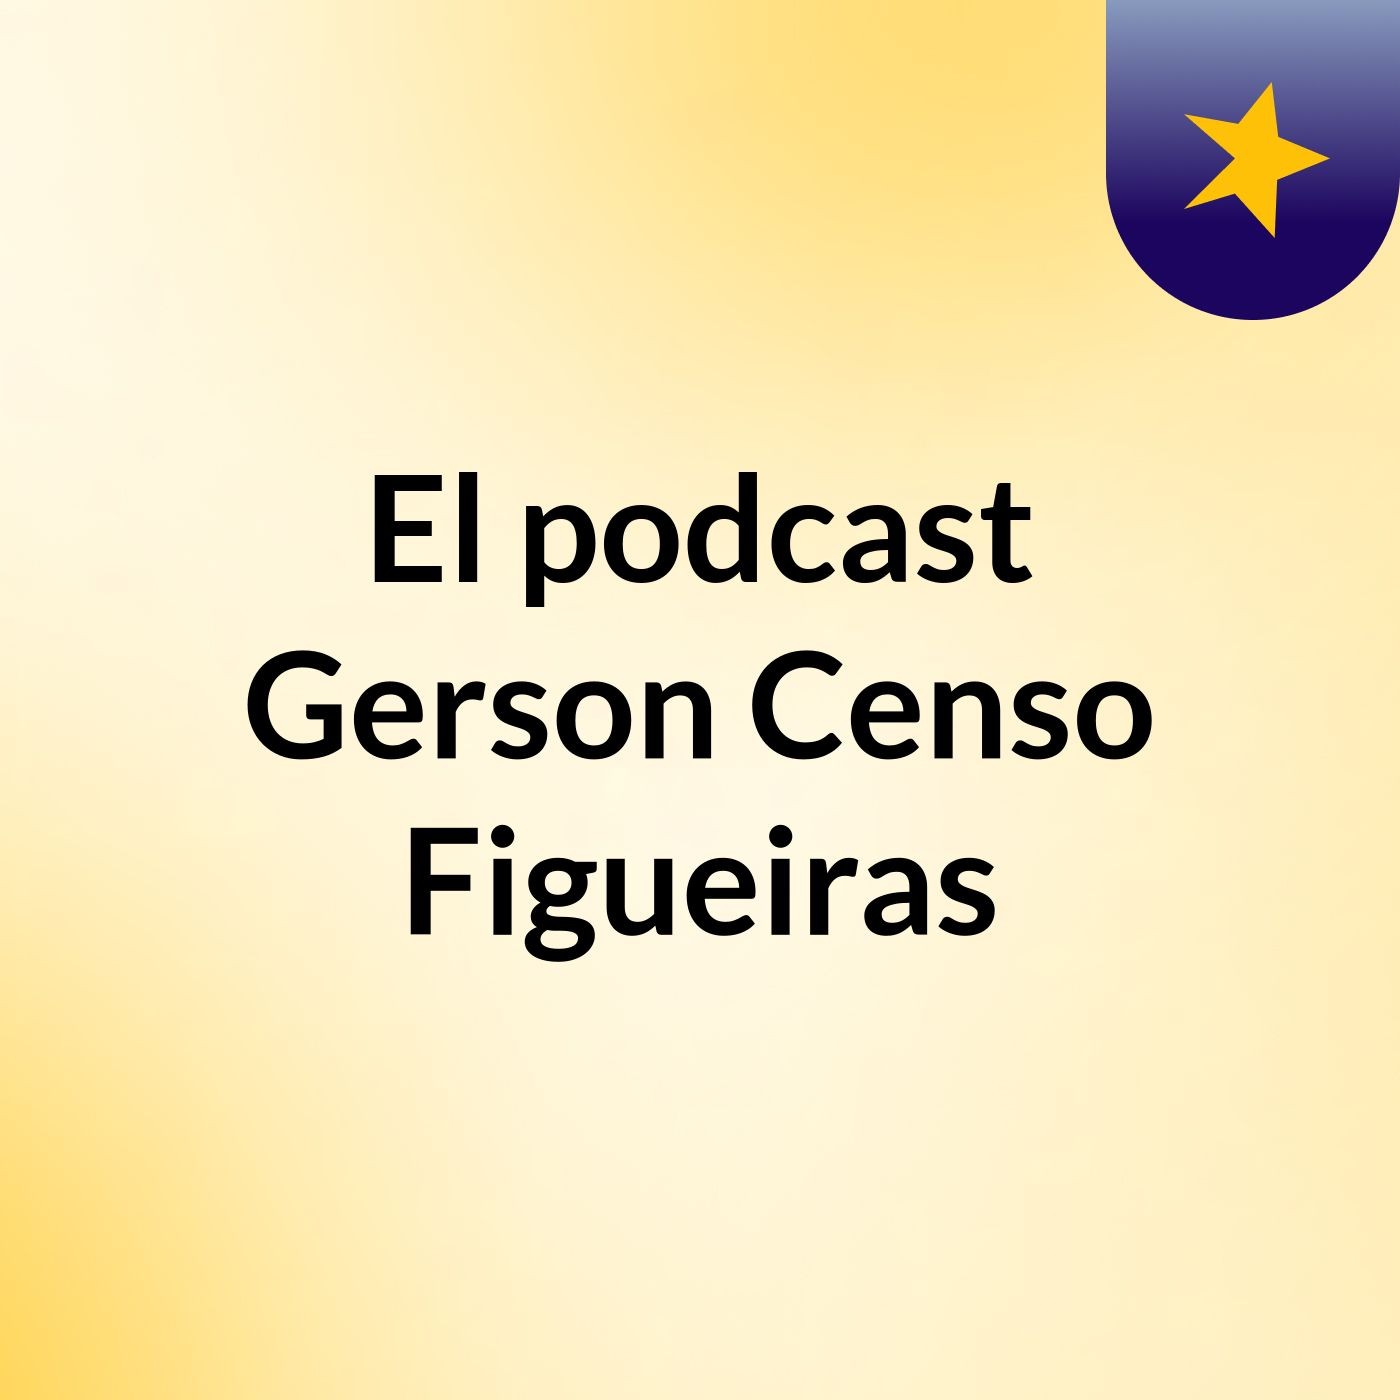 El podcast Gerson Censo Figueiras